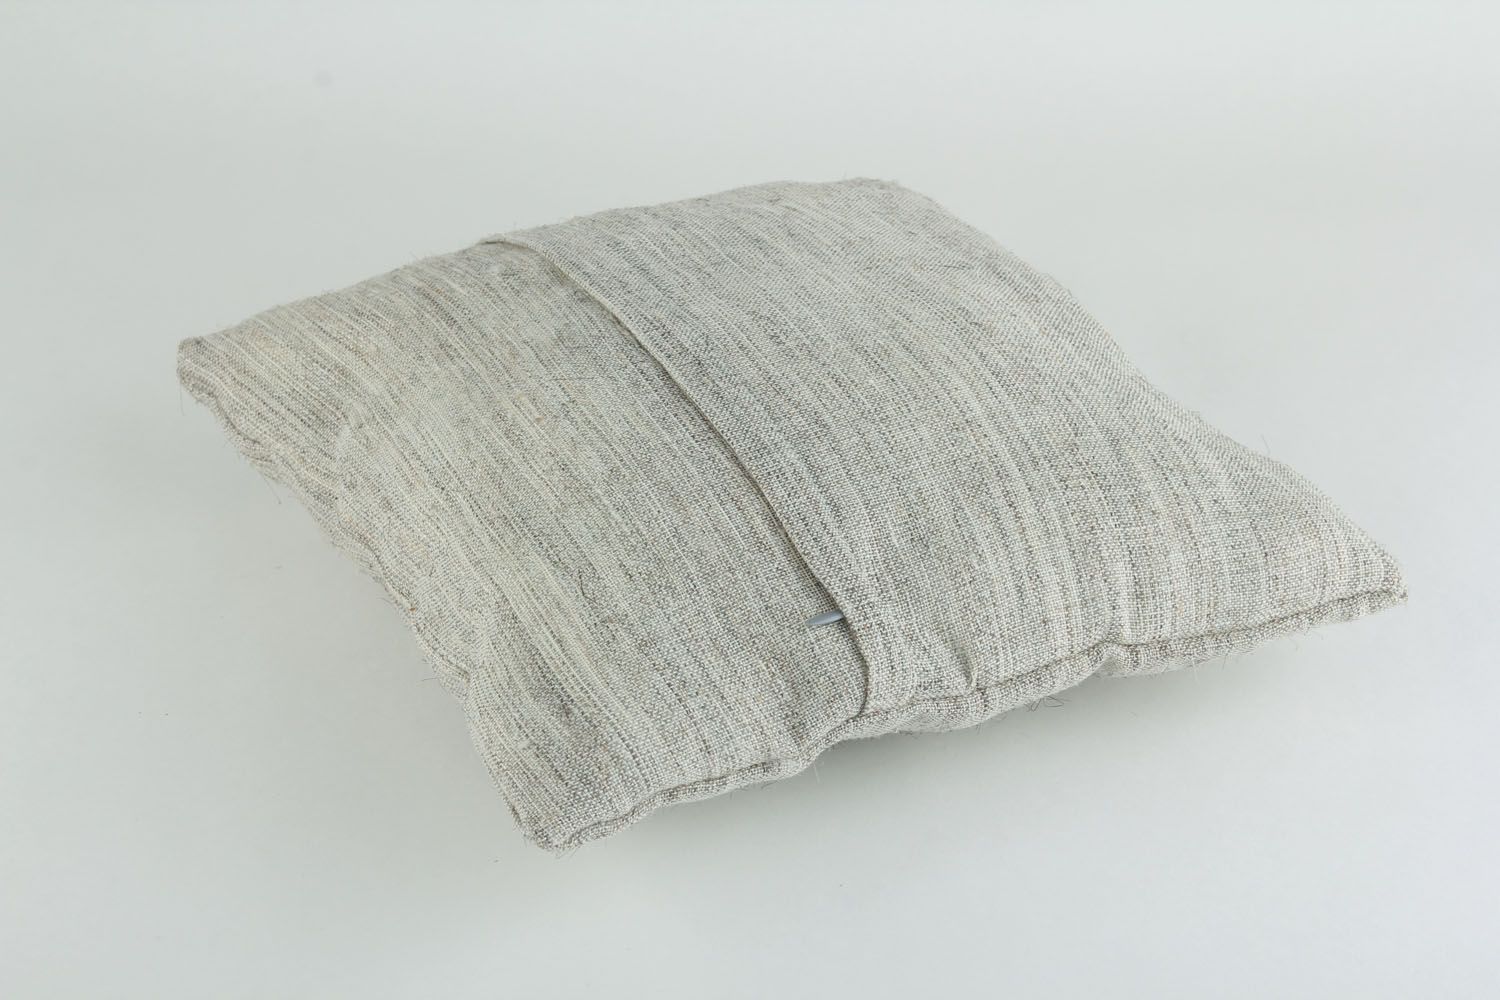 Homemade cushion with zipper photo 2